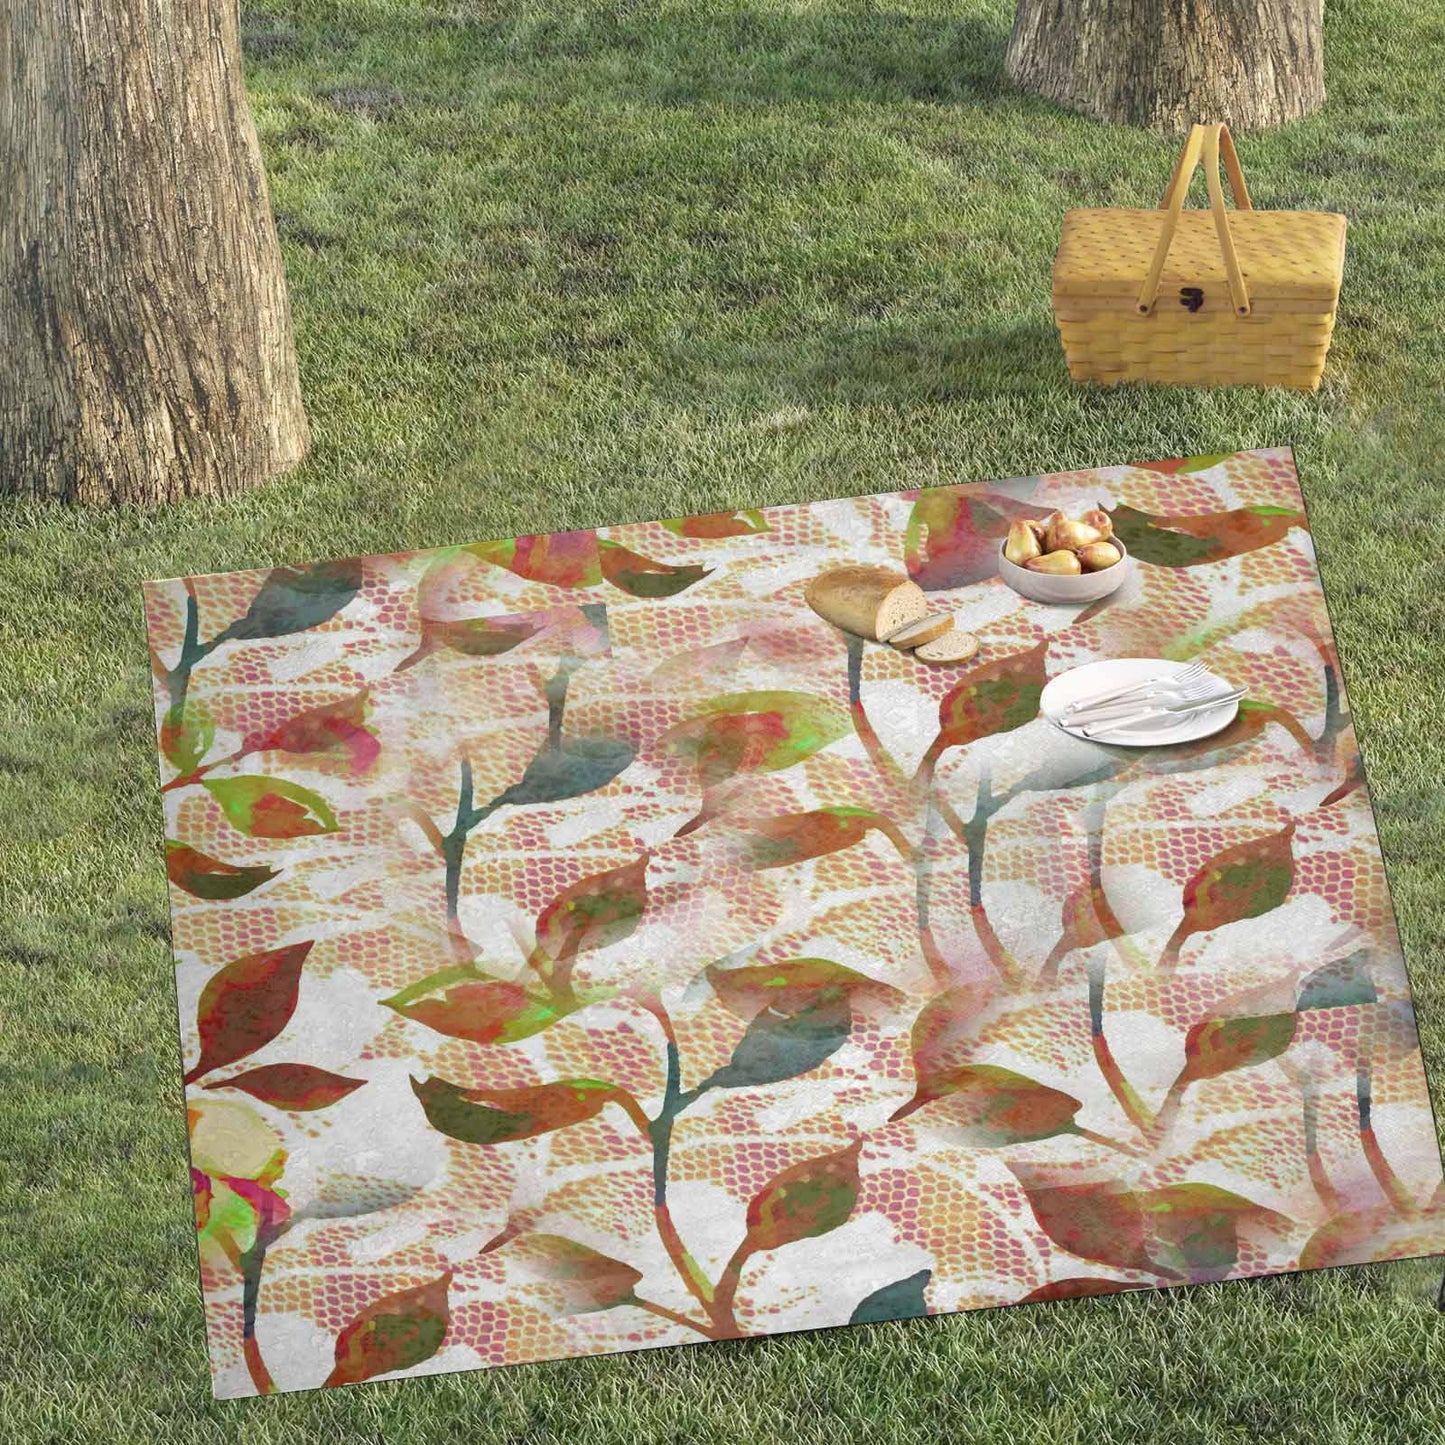 Victorian lace print waterproof picnic mat, 69 x 55in, design 52